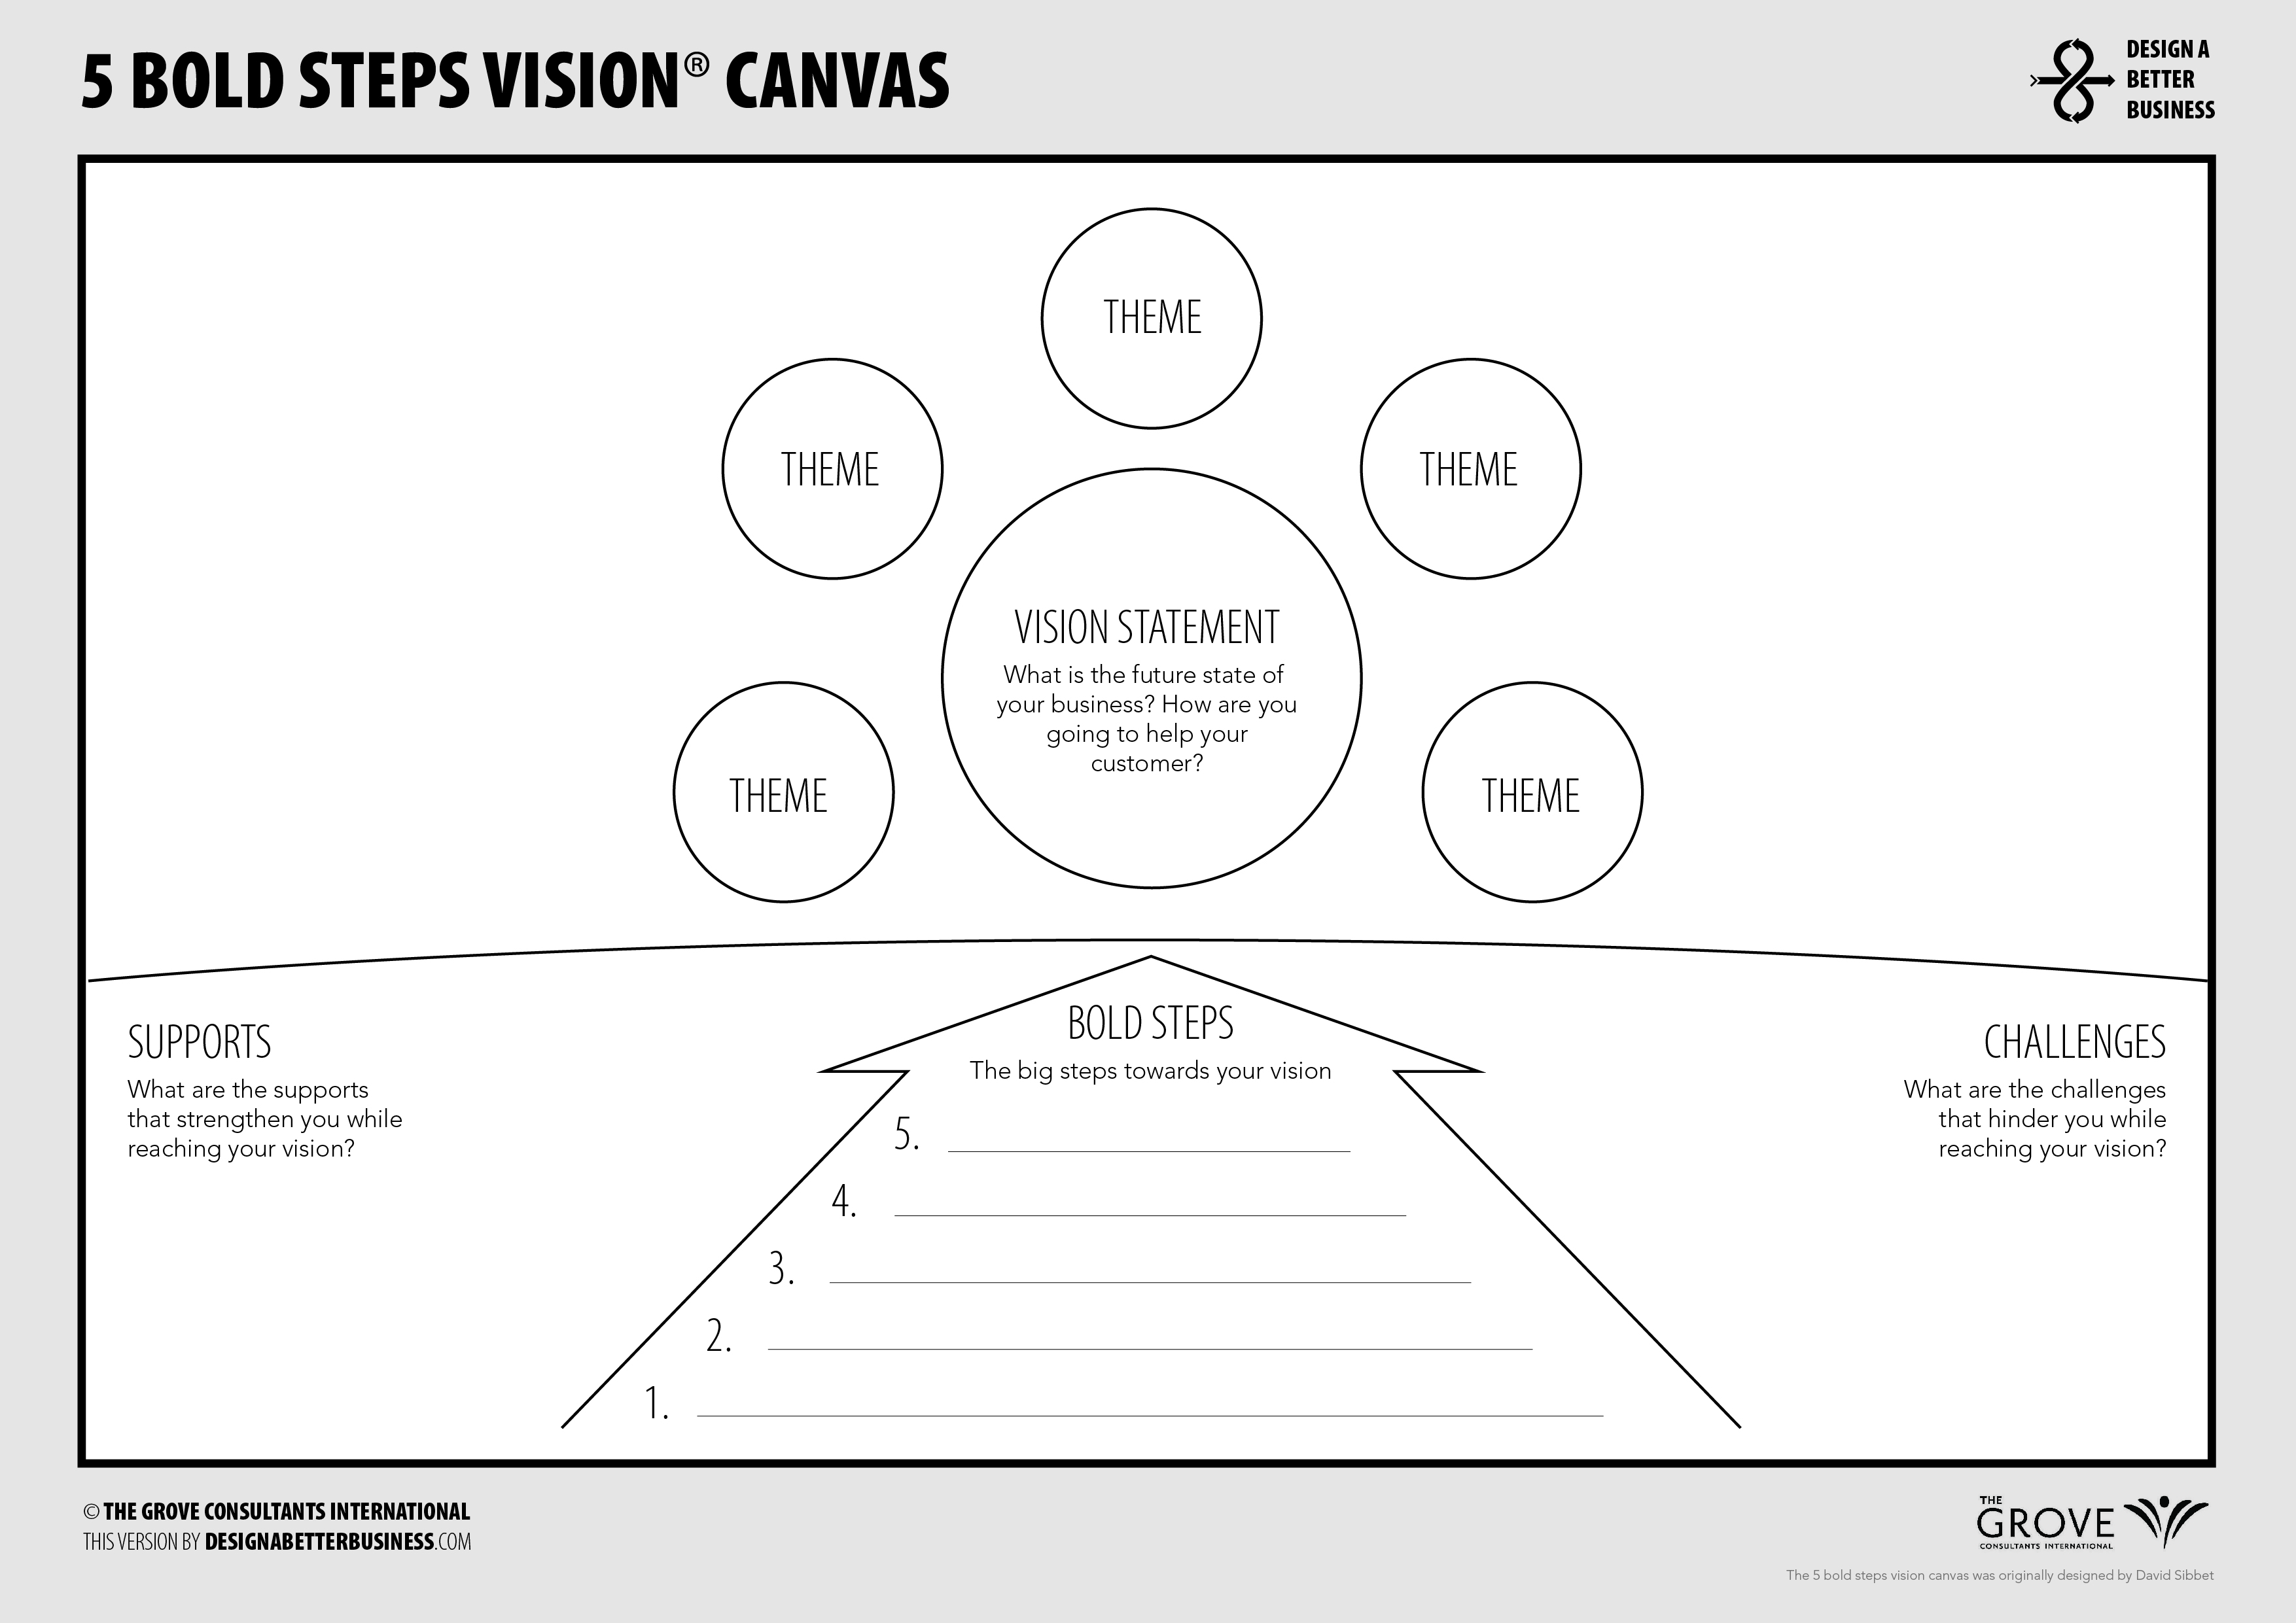 5 Bold Steps Vision® Canvas